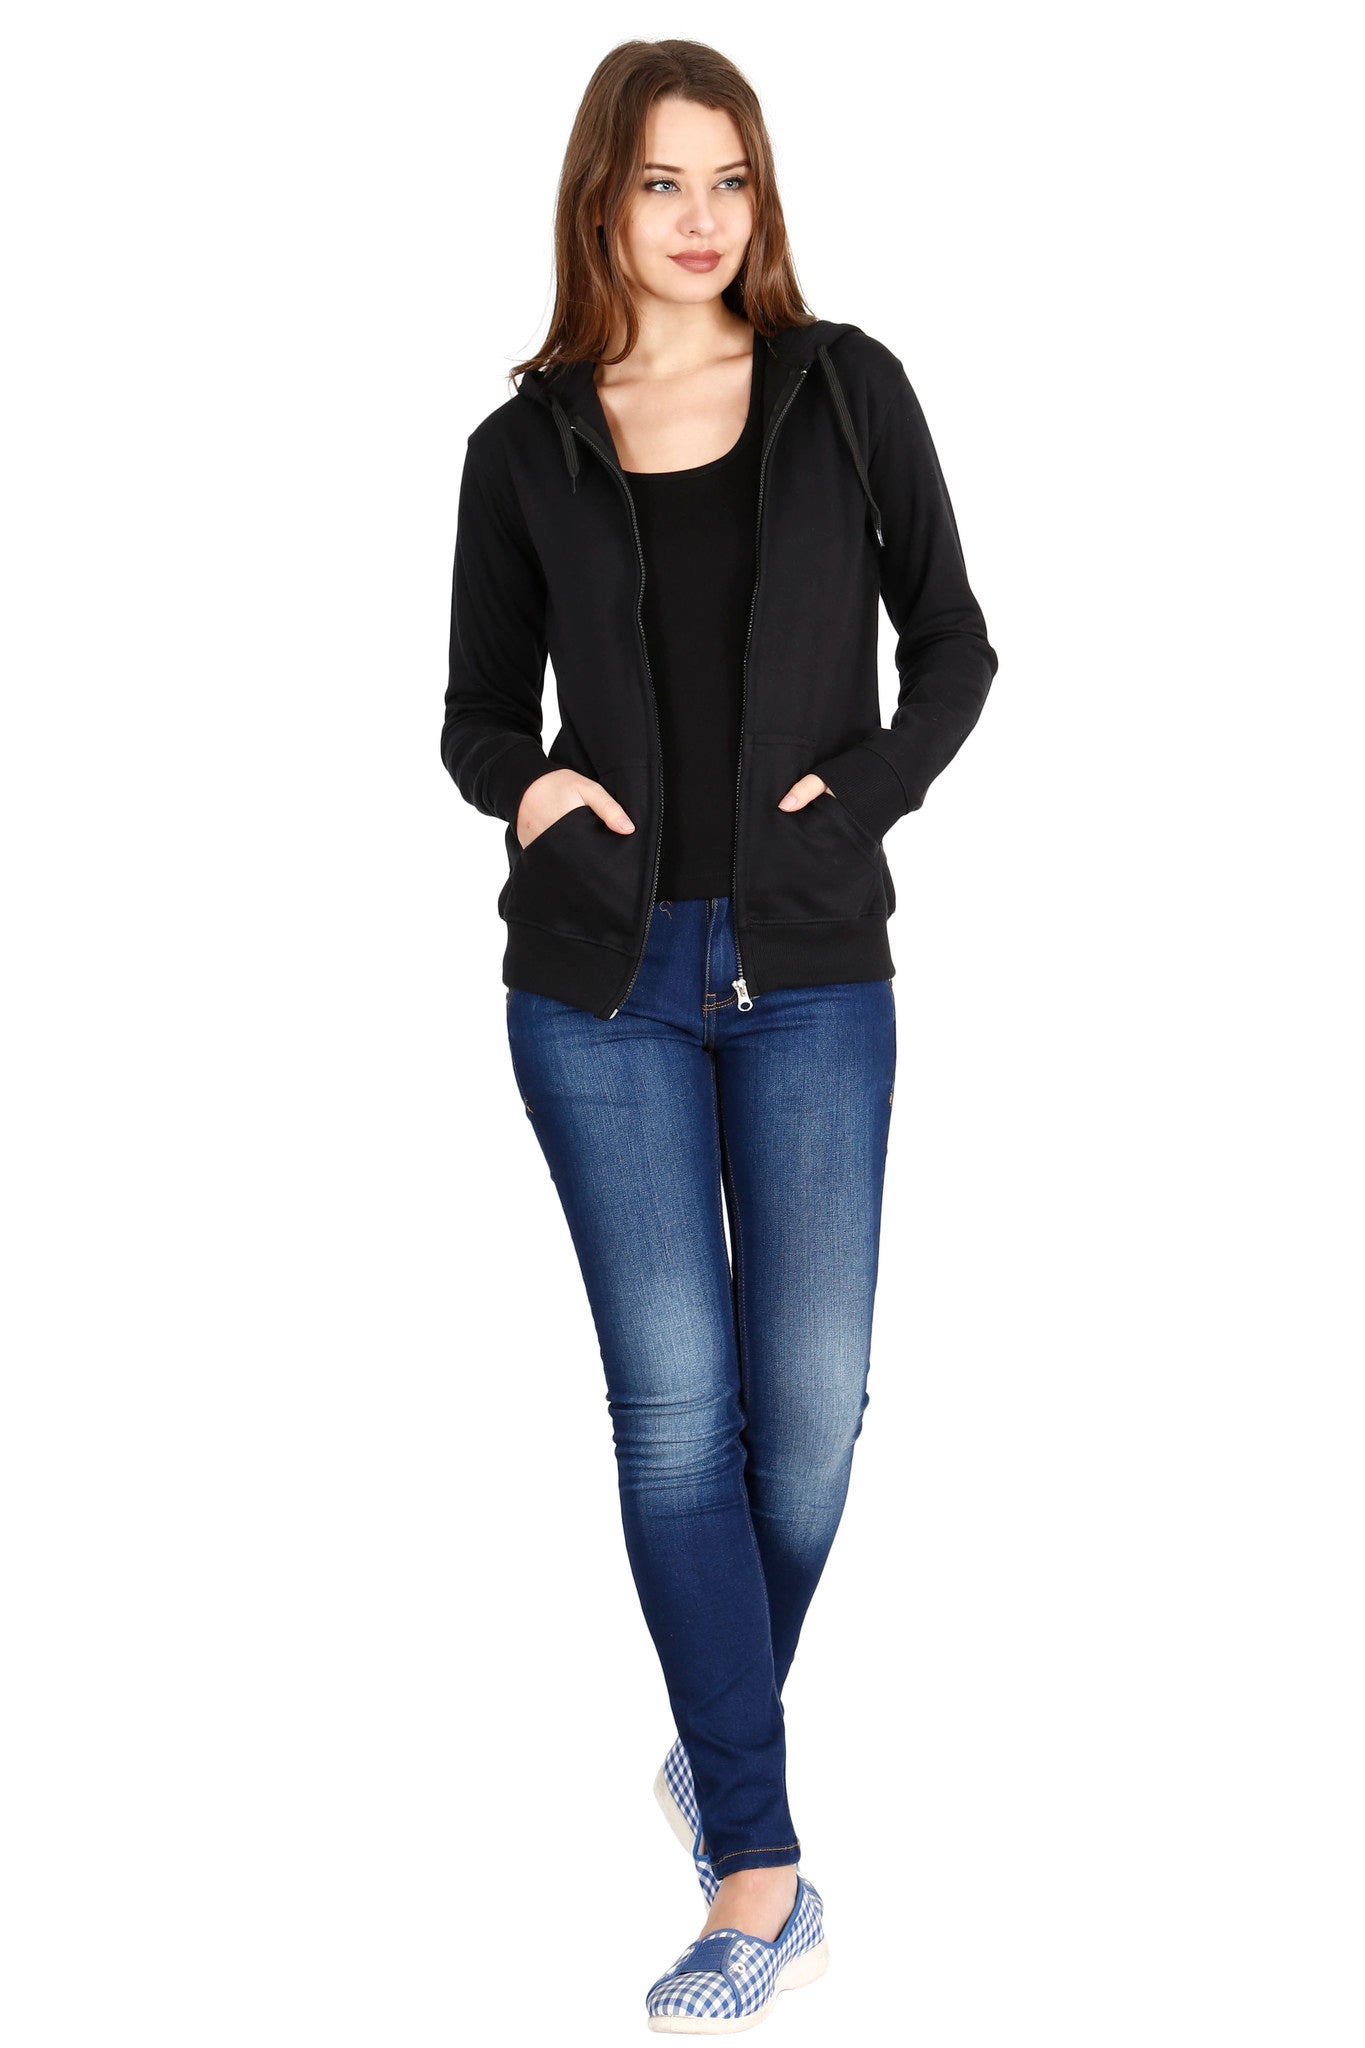 Women's Cotton Plain Full Sleeve Black Color Hoodies/Sweatshirt